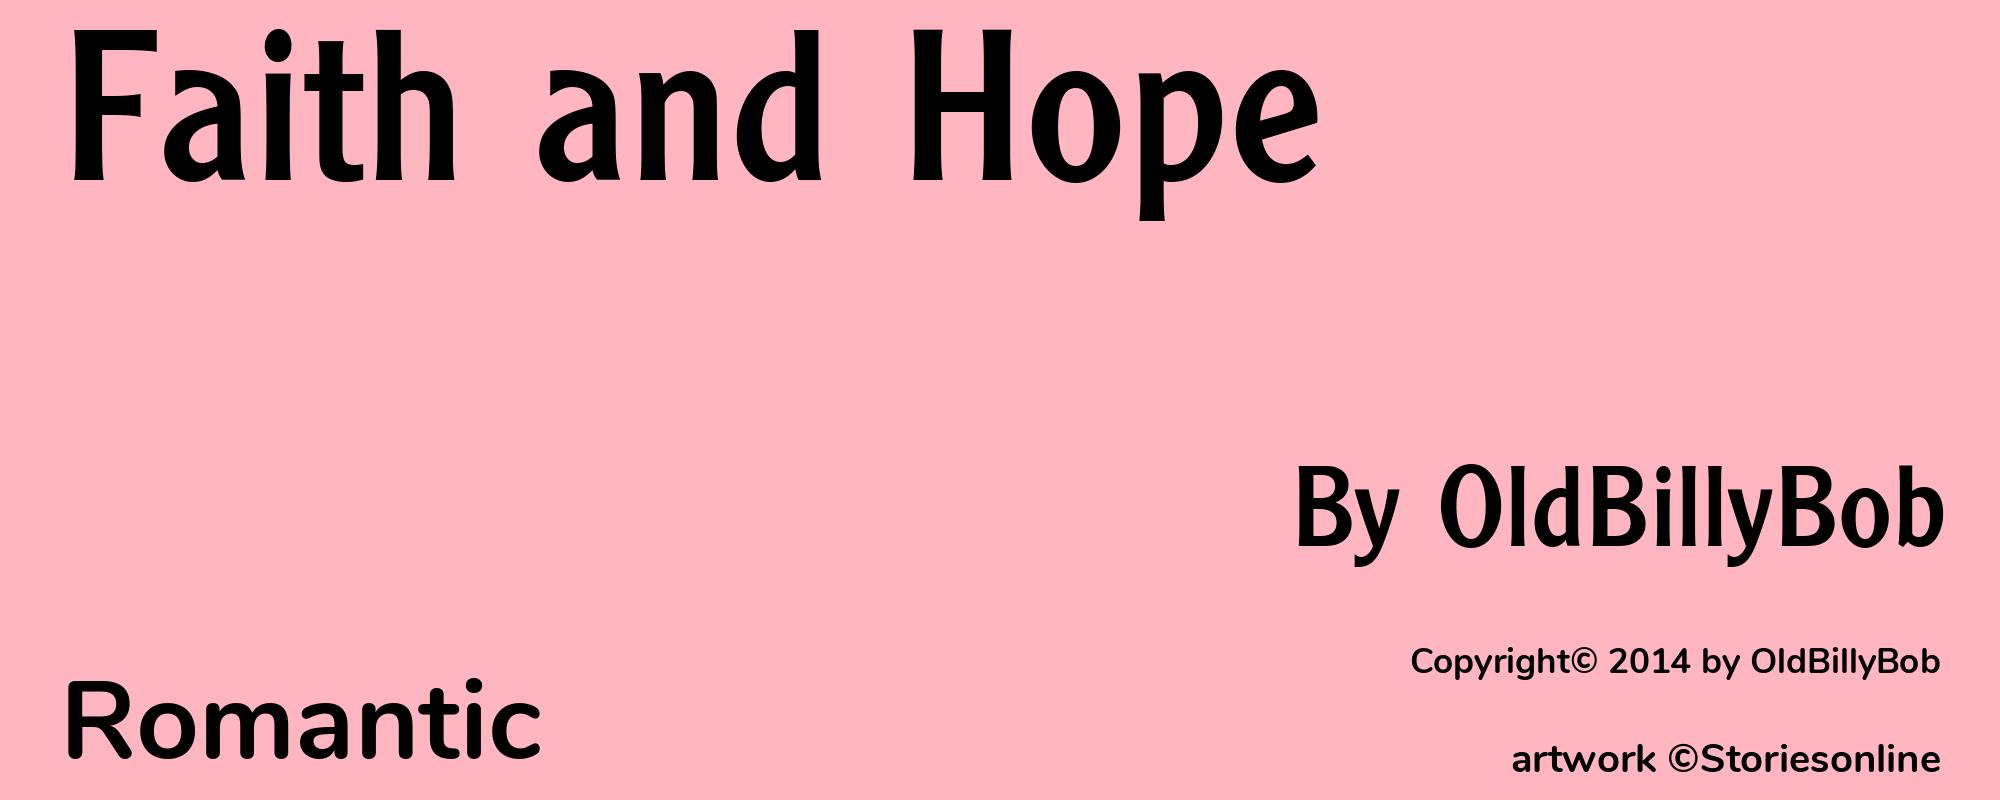 Faith and Hope - Cover